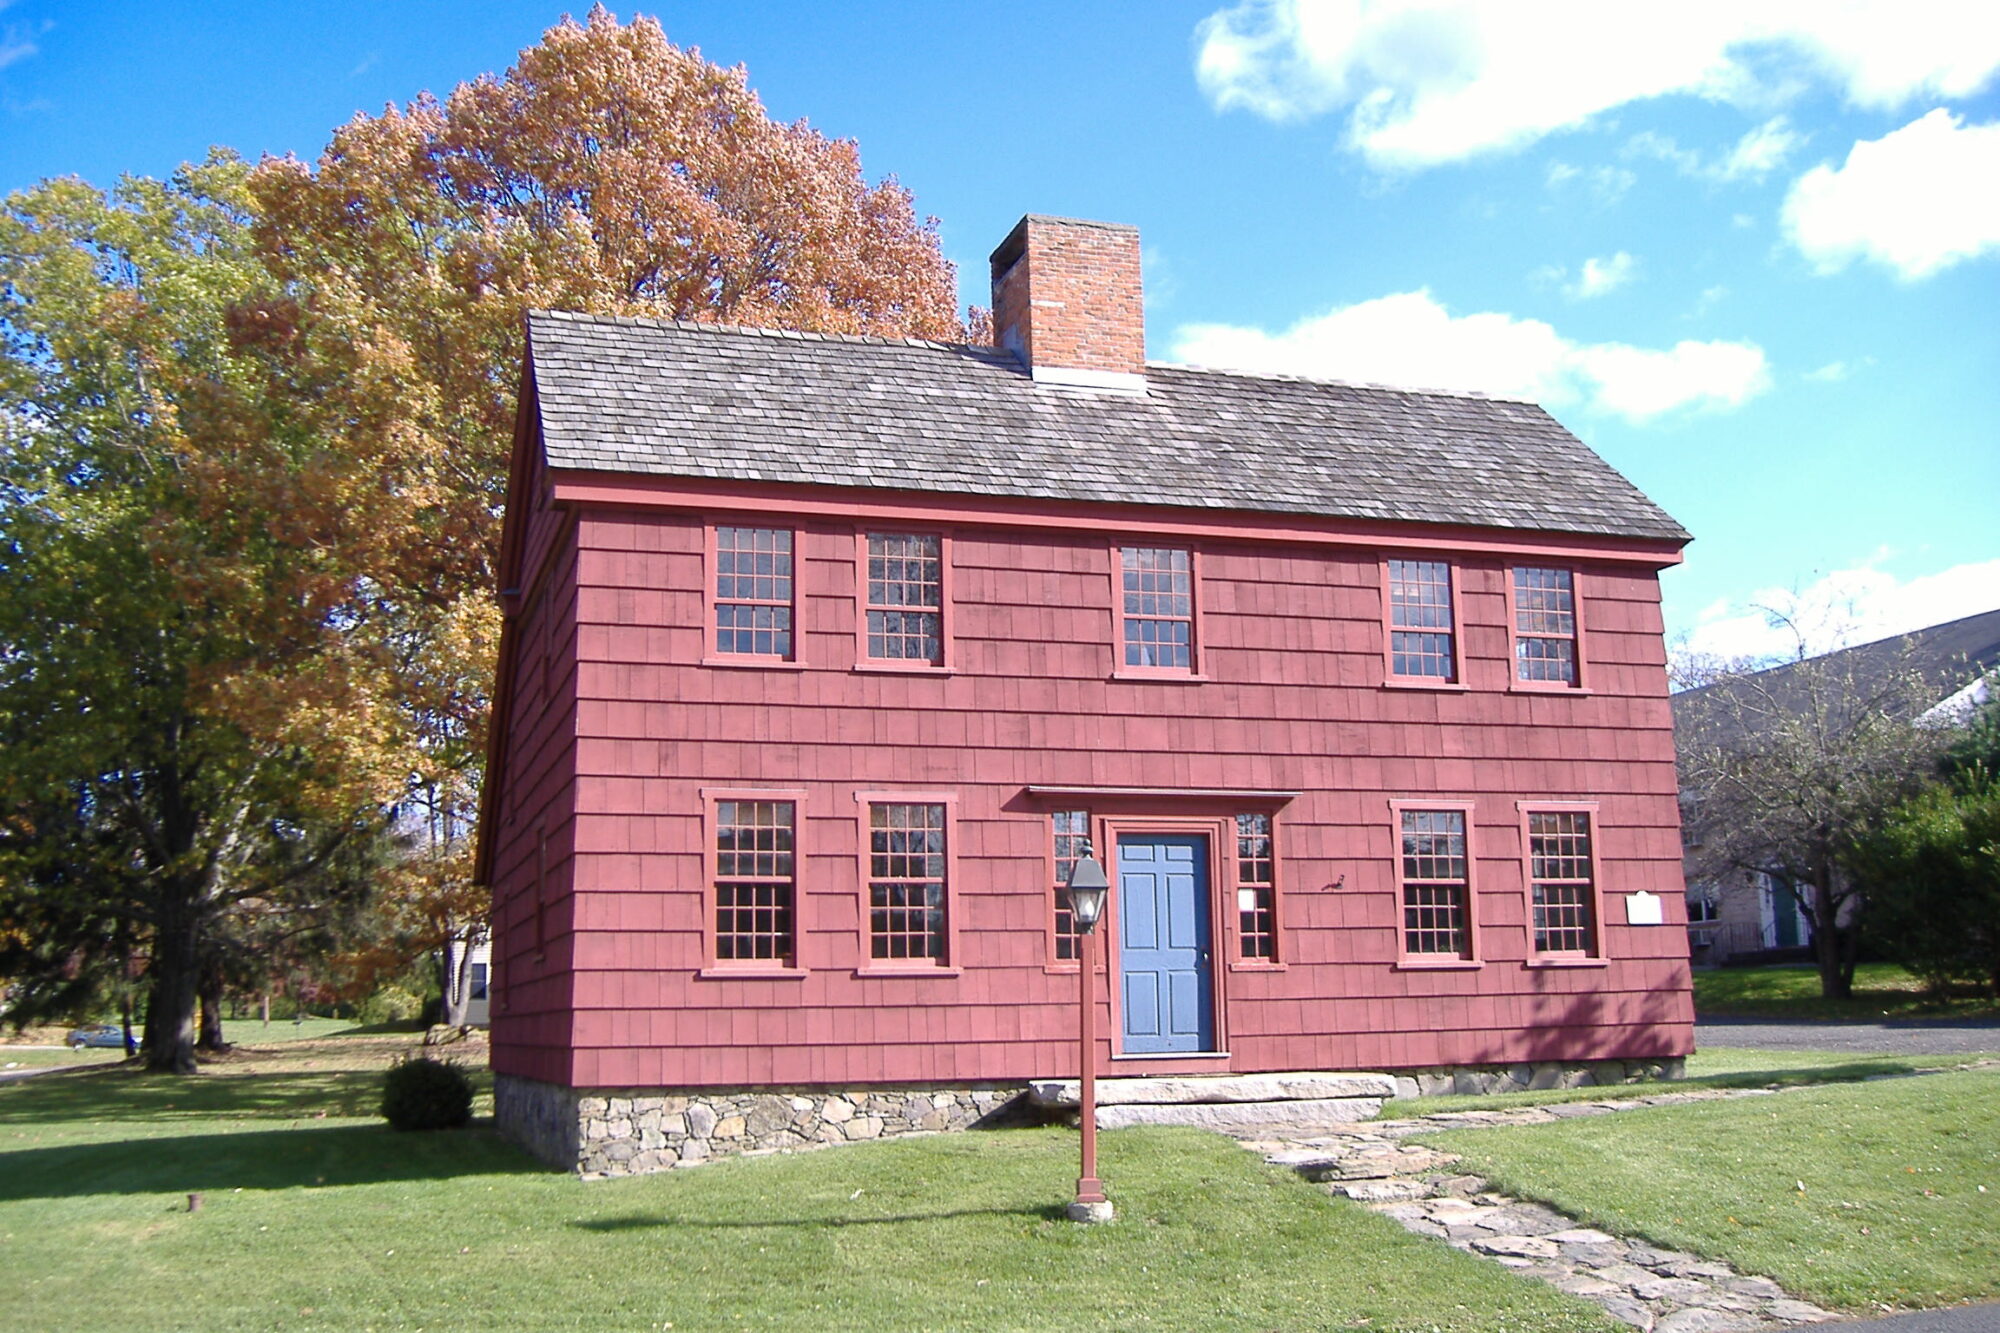 Ridgefield Historical Society's Scott House for Witness Stones